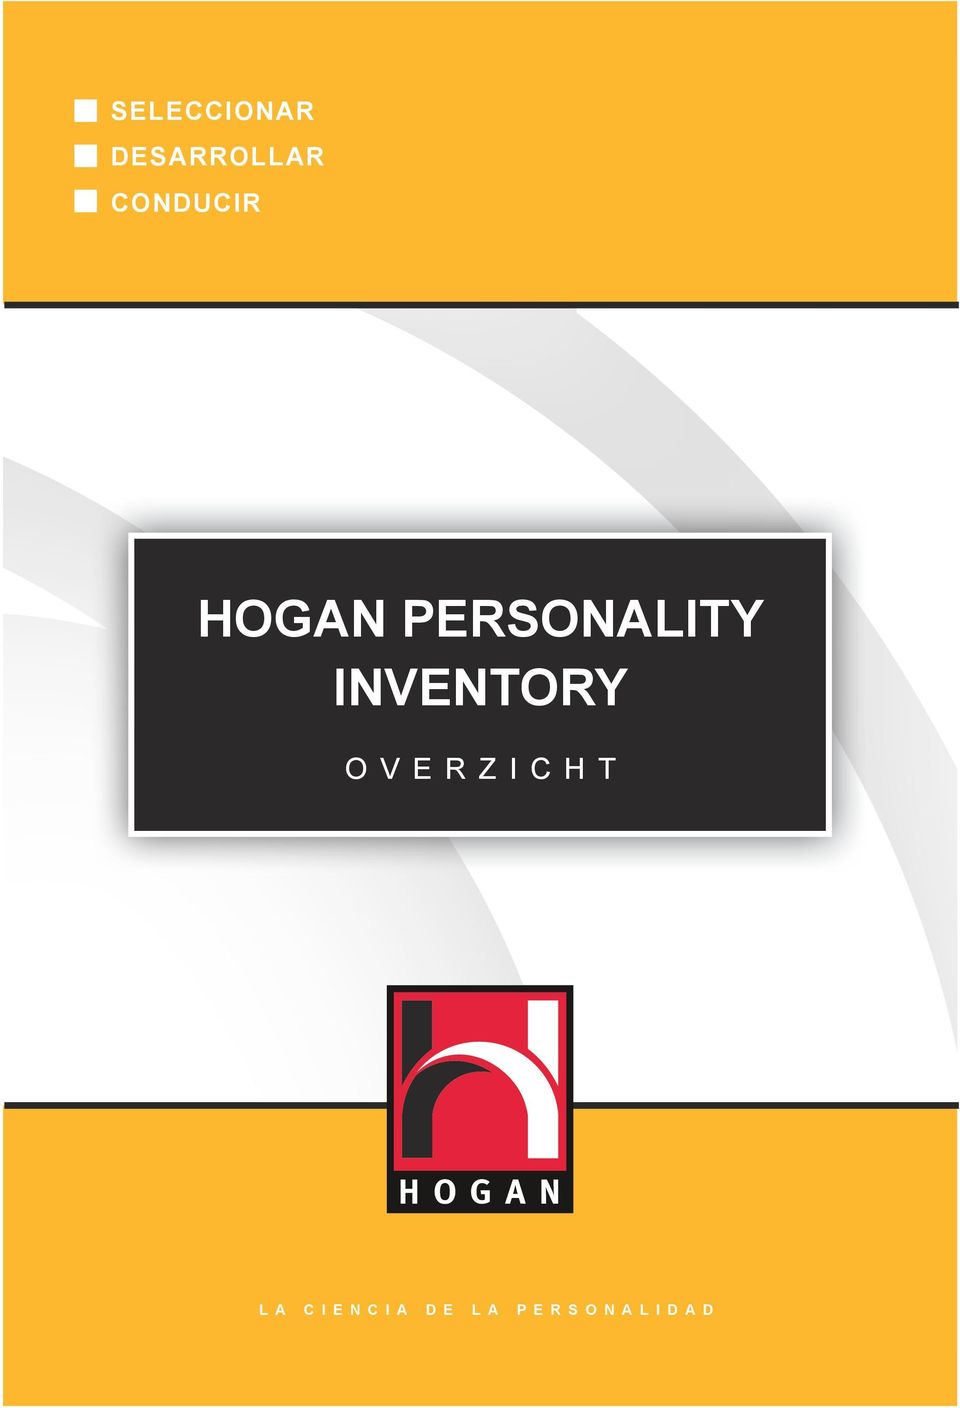 HOGAN PERSONALITY INVENTORY - PDF Gratis download